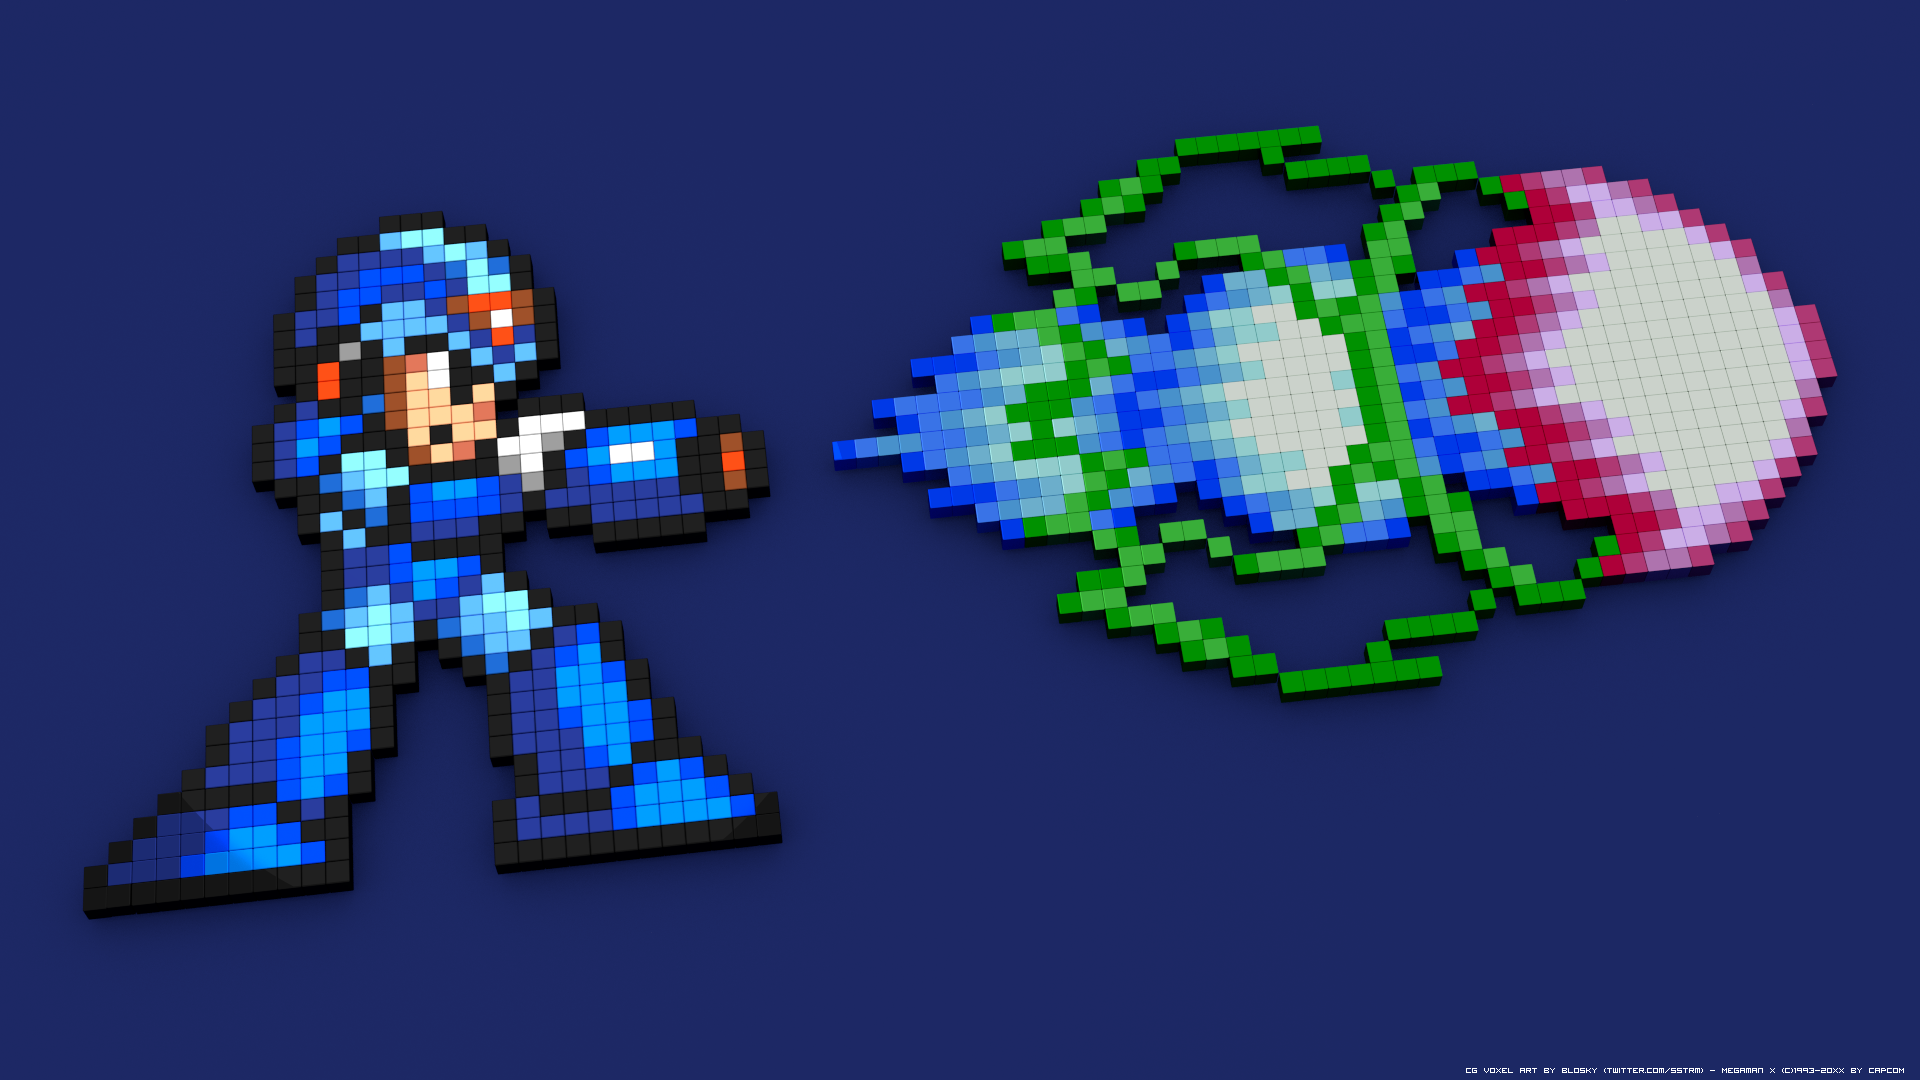 General 1920x1080 16-bit 8-bit pixelated pixel art 3D Blocks CGI video games Mega Man Mega Man X retro games video game art simple background blue background SNES